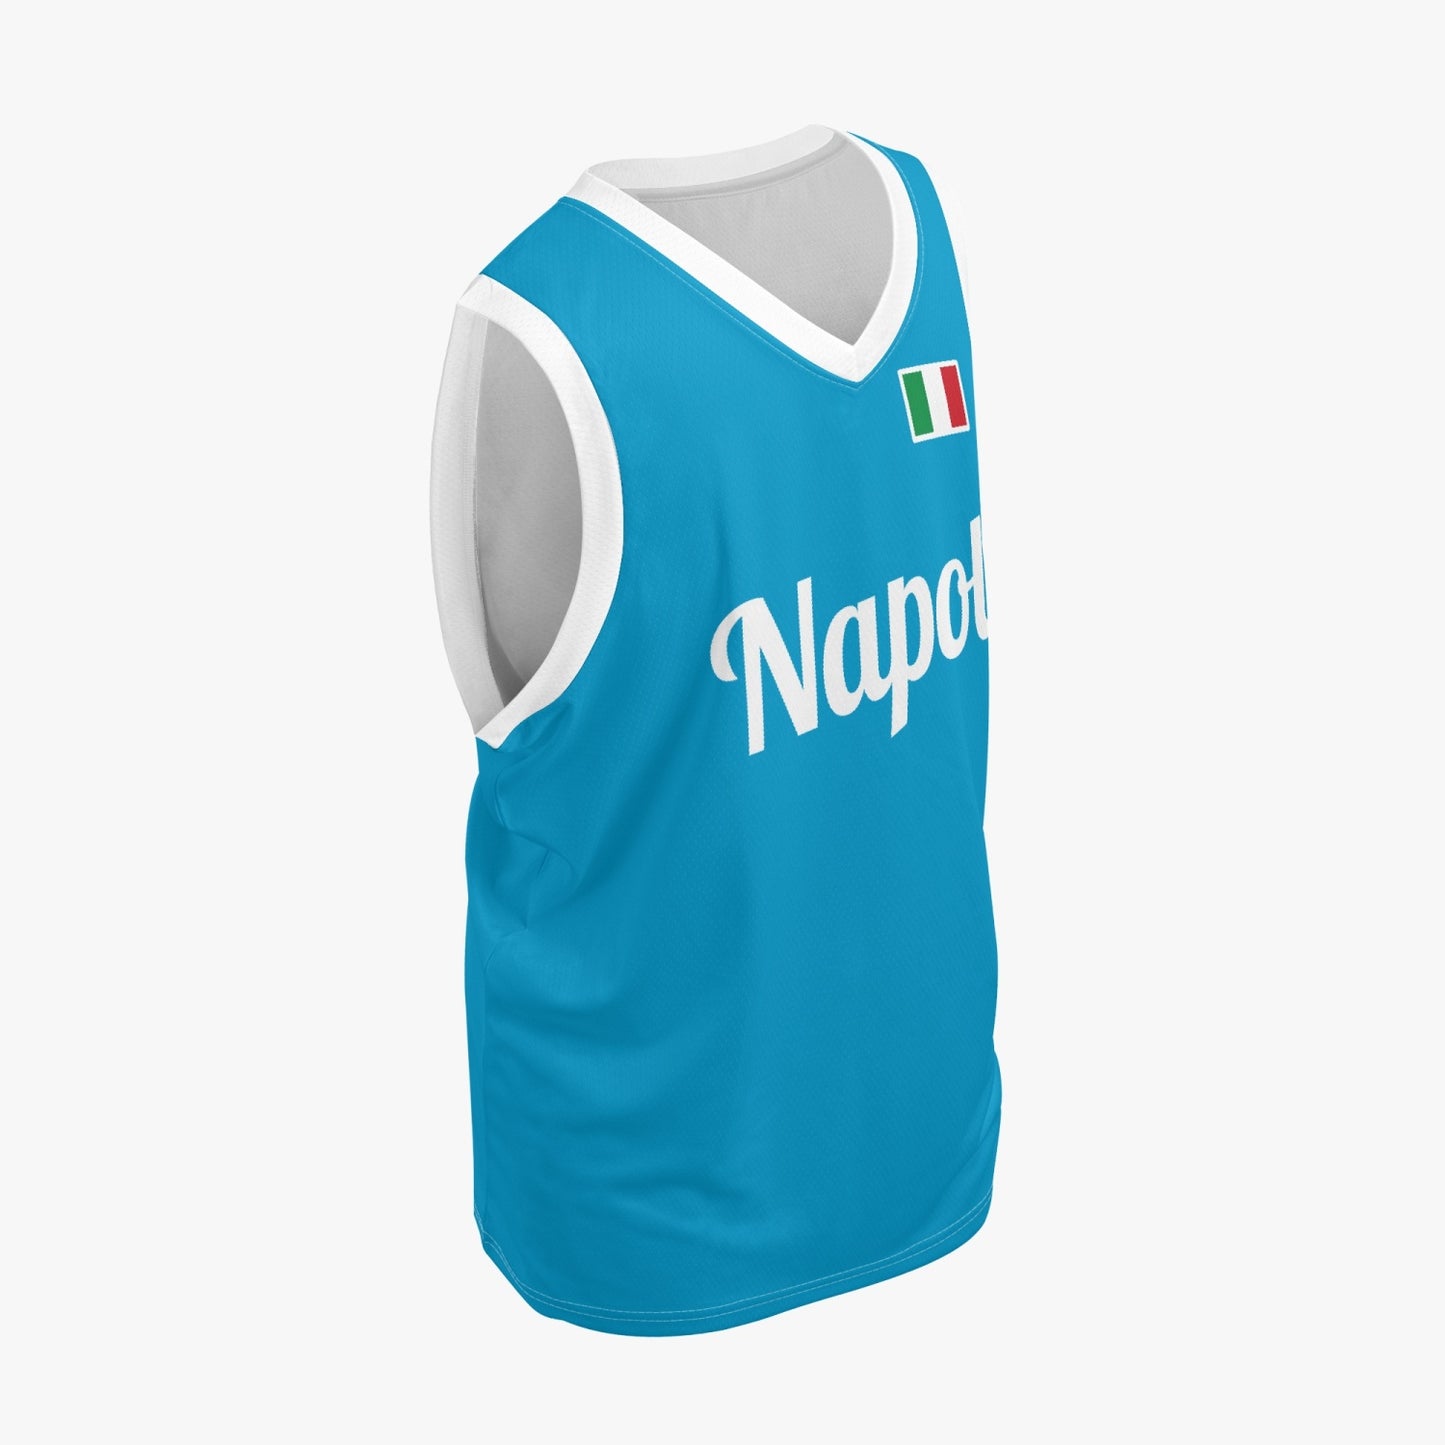 Napoli Basketball Jersey Set